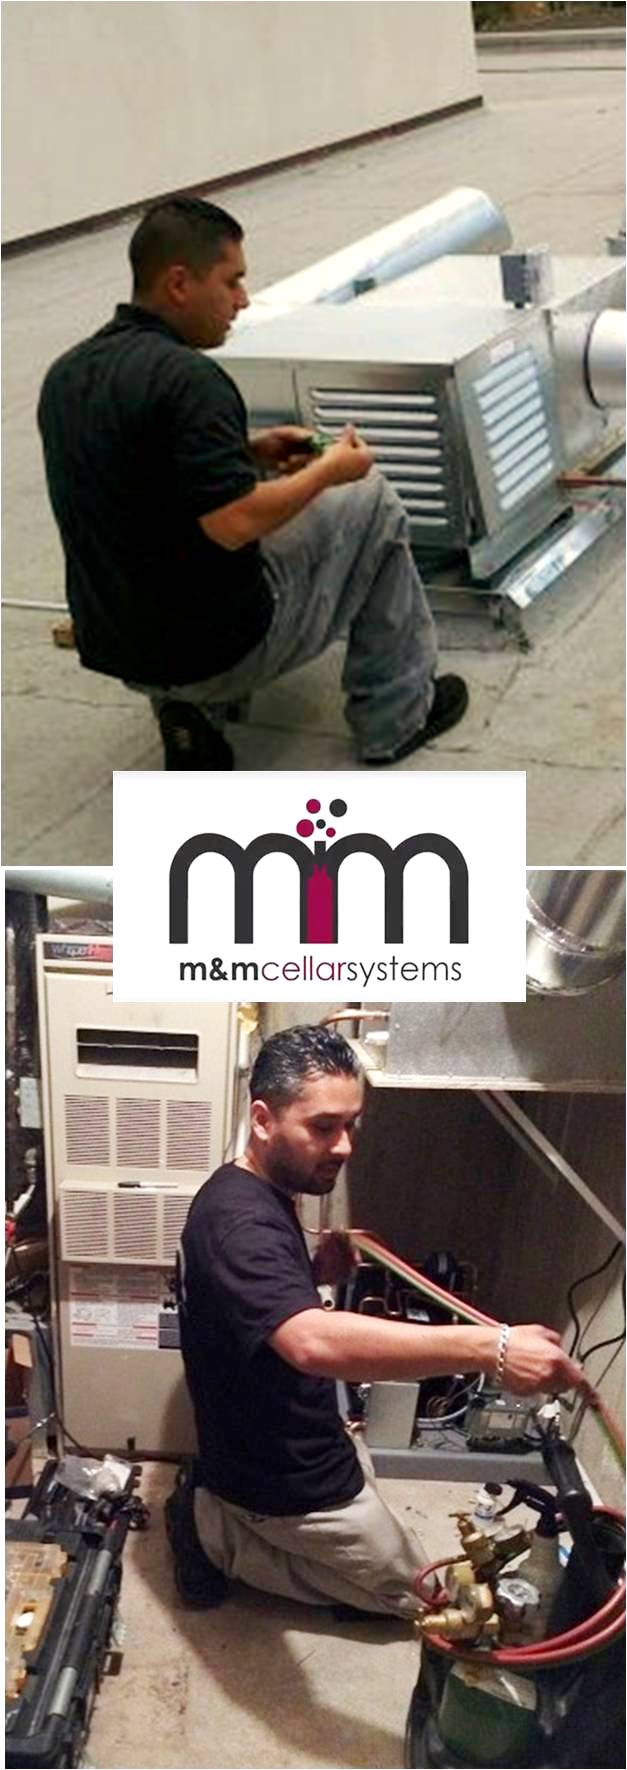 Mario Morales M&M Cellar Systems Refrigeration Expert in Austin